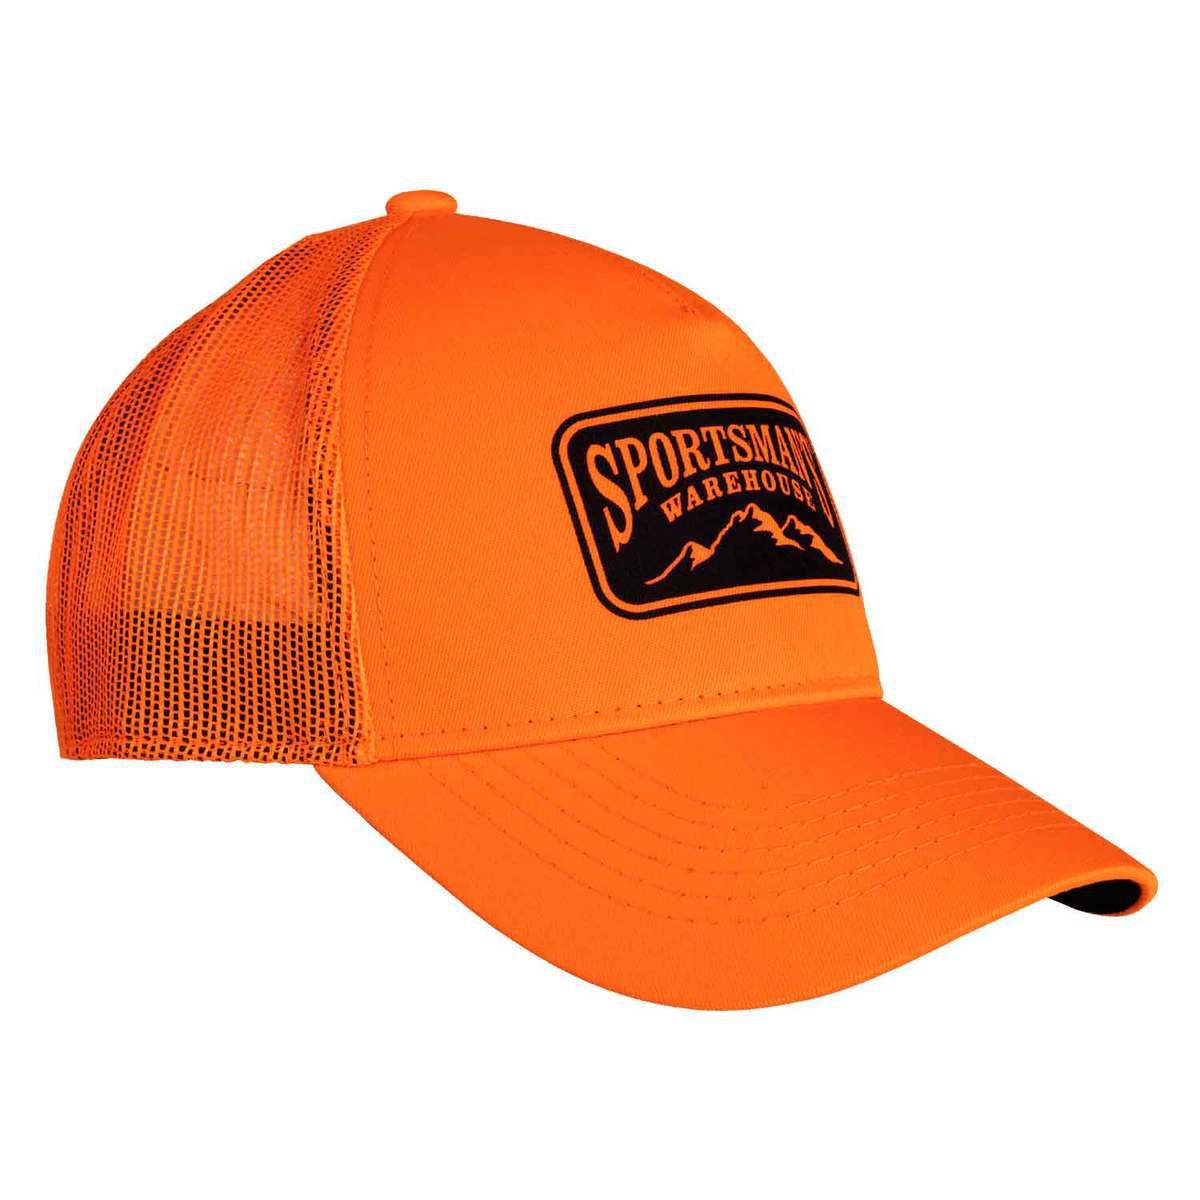 Blaze Orange Back Warehouse Orange - - Mesh | Warehouse One Fits Men\'s Most Hat Sportsman\'s Size Blaze Blaze Sportsman\'s